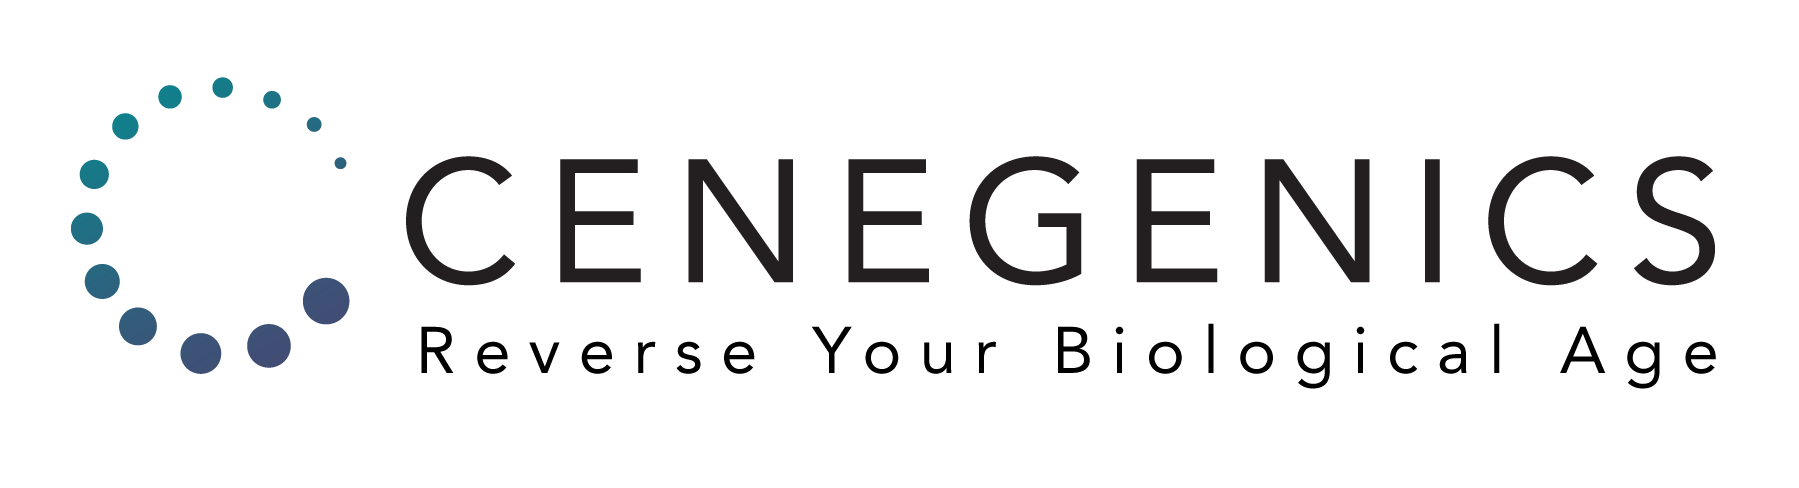 Cenegenics-Transitional-Logo